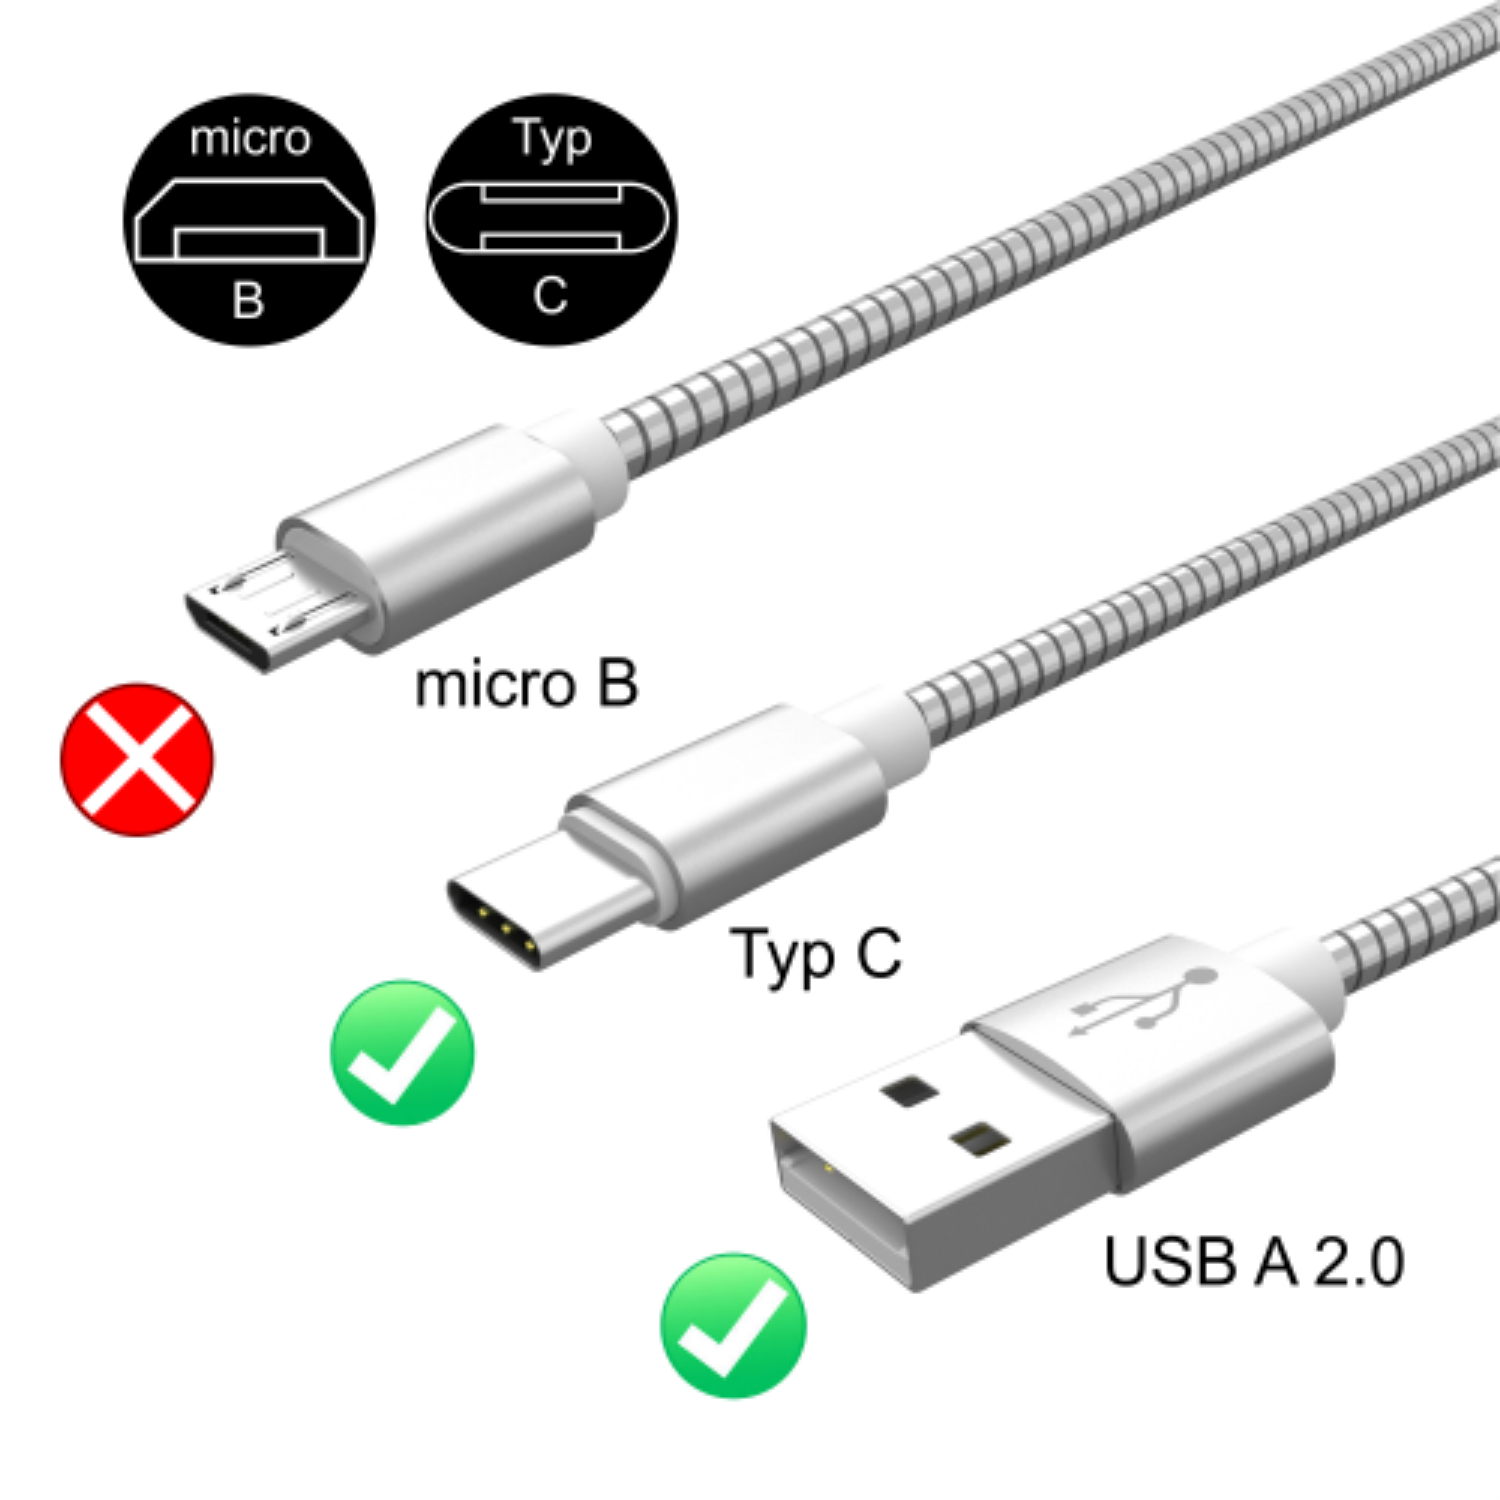 AIXONTEC 2x 1,0m Gold A, Kabel zu Edelstahl , USB C USB Silber USB